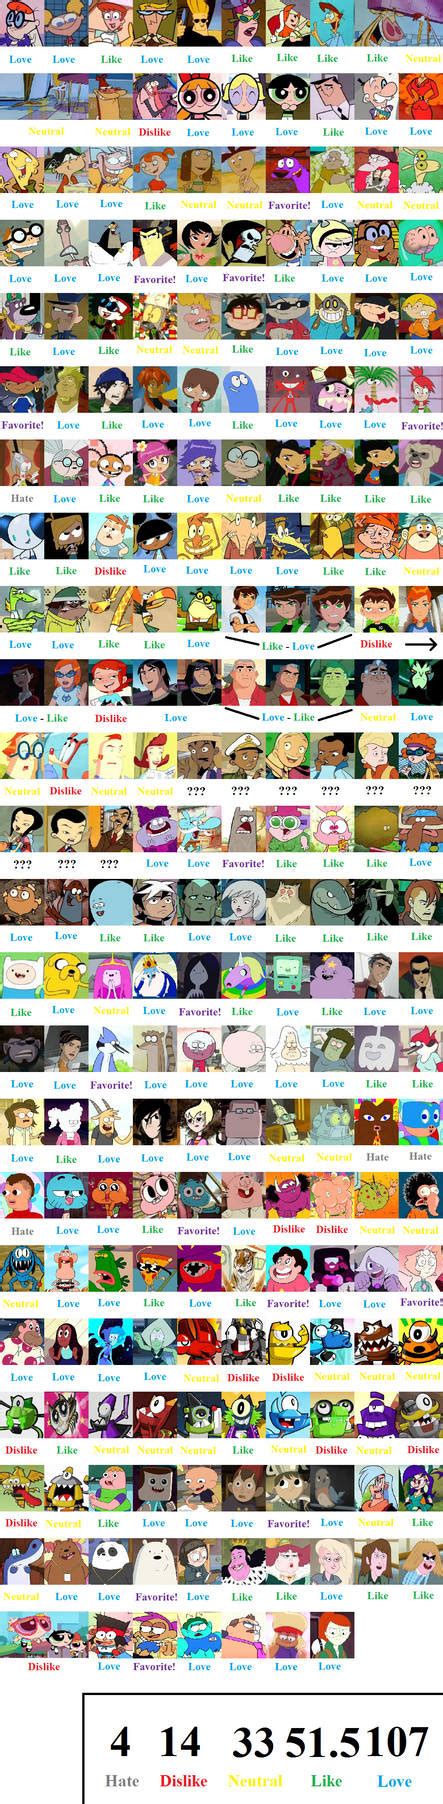 Cartoon Network Protagonists Scorecard By Mranimatedtoon On Deviantart